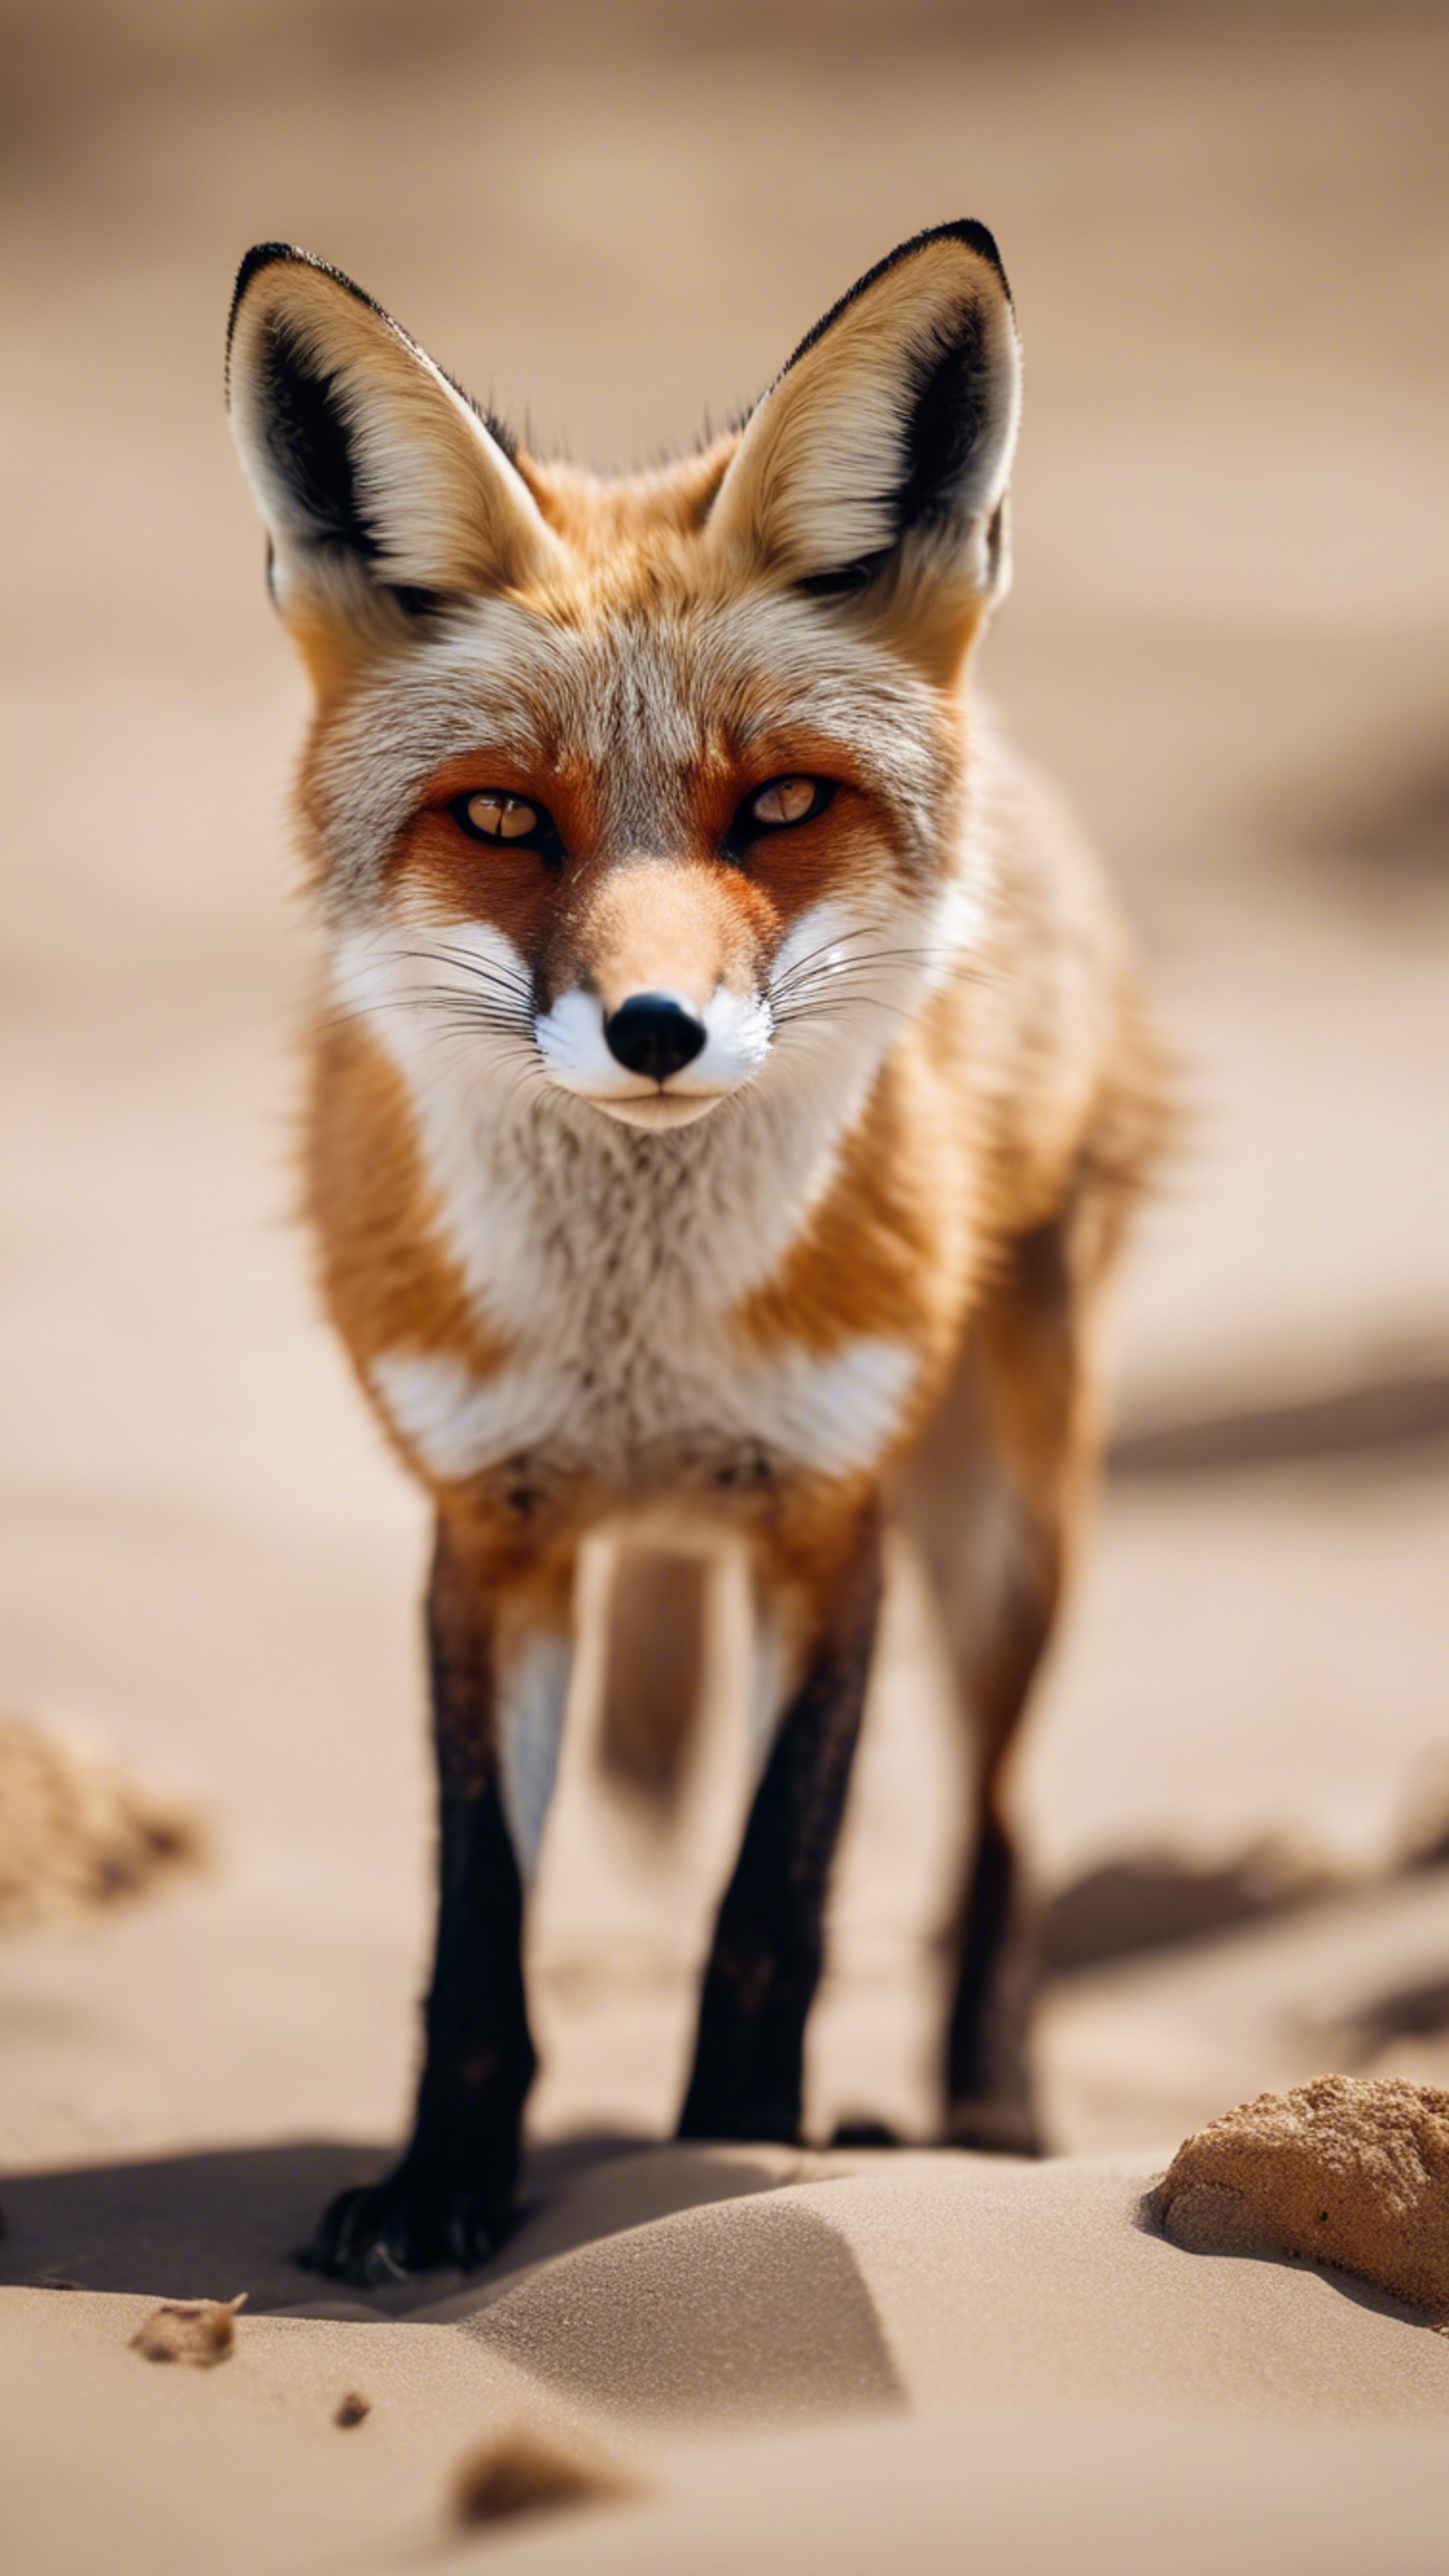 A lone desert fox in its natural habitat, roaming around amid the sand dunes. Tapeet[17bb71b2b2bc40f18dca]